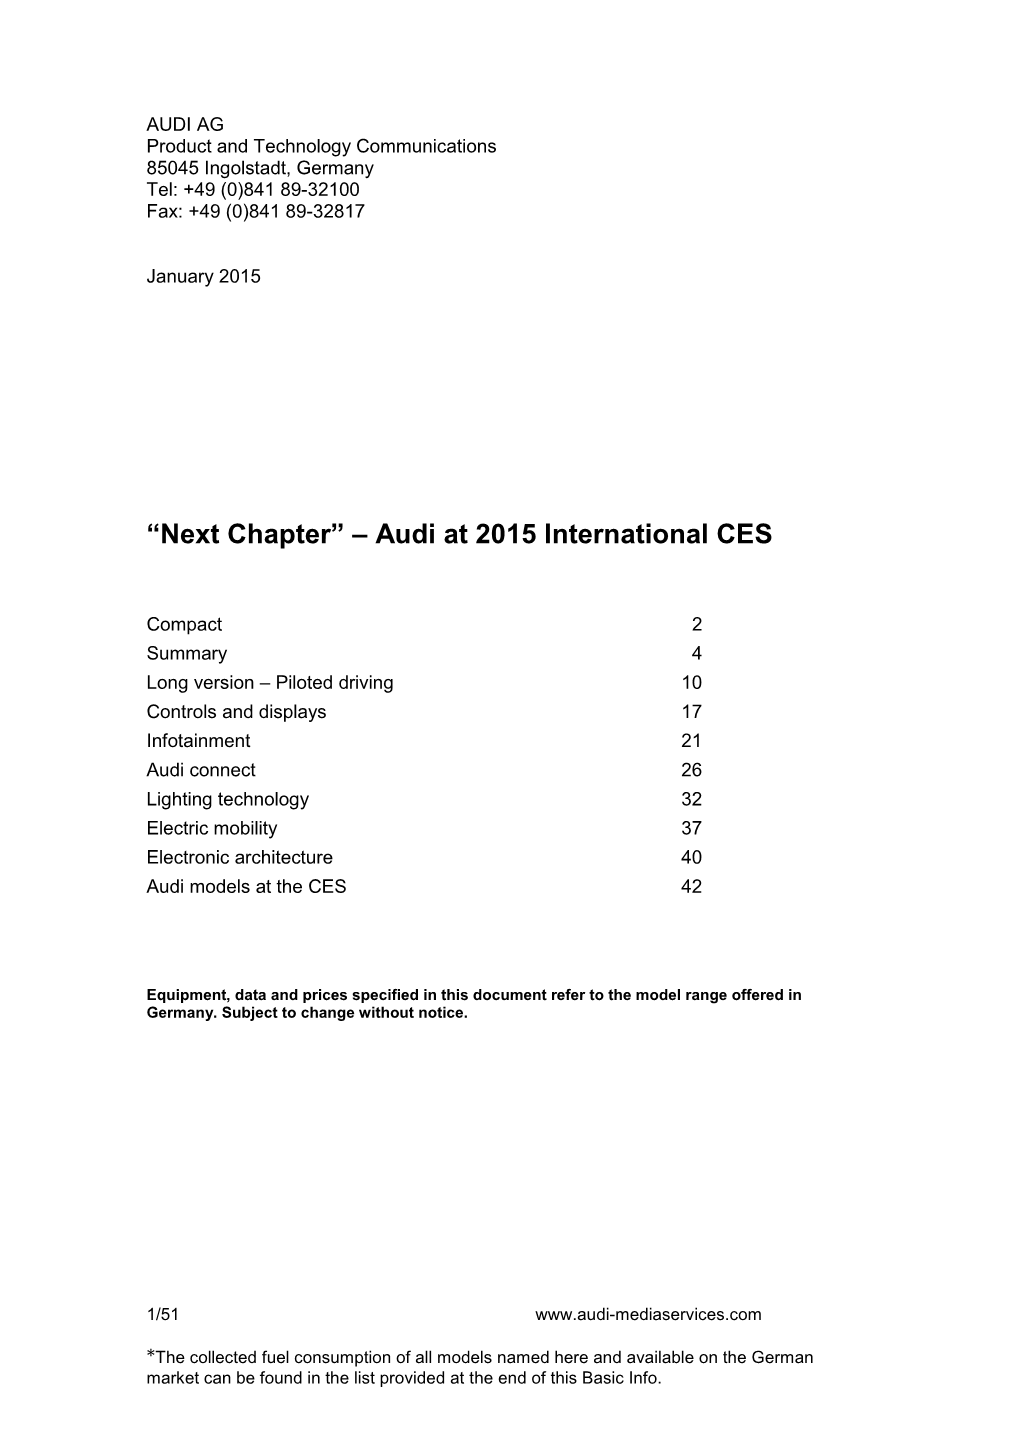 “Next Chapter” – Audi at 2015 International CES